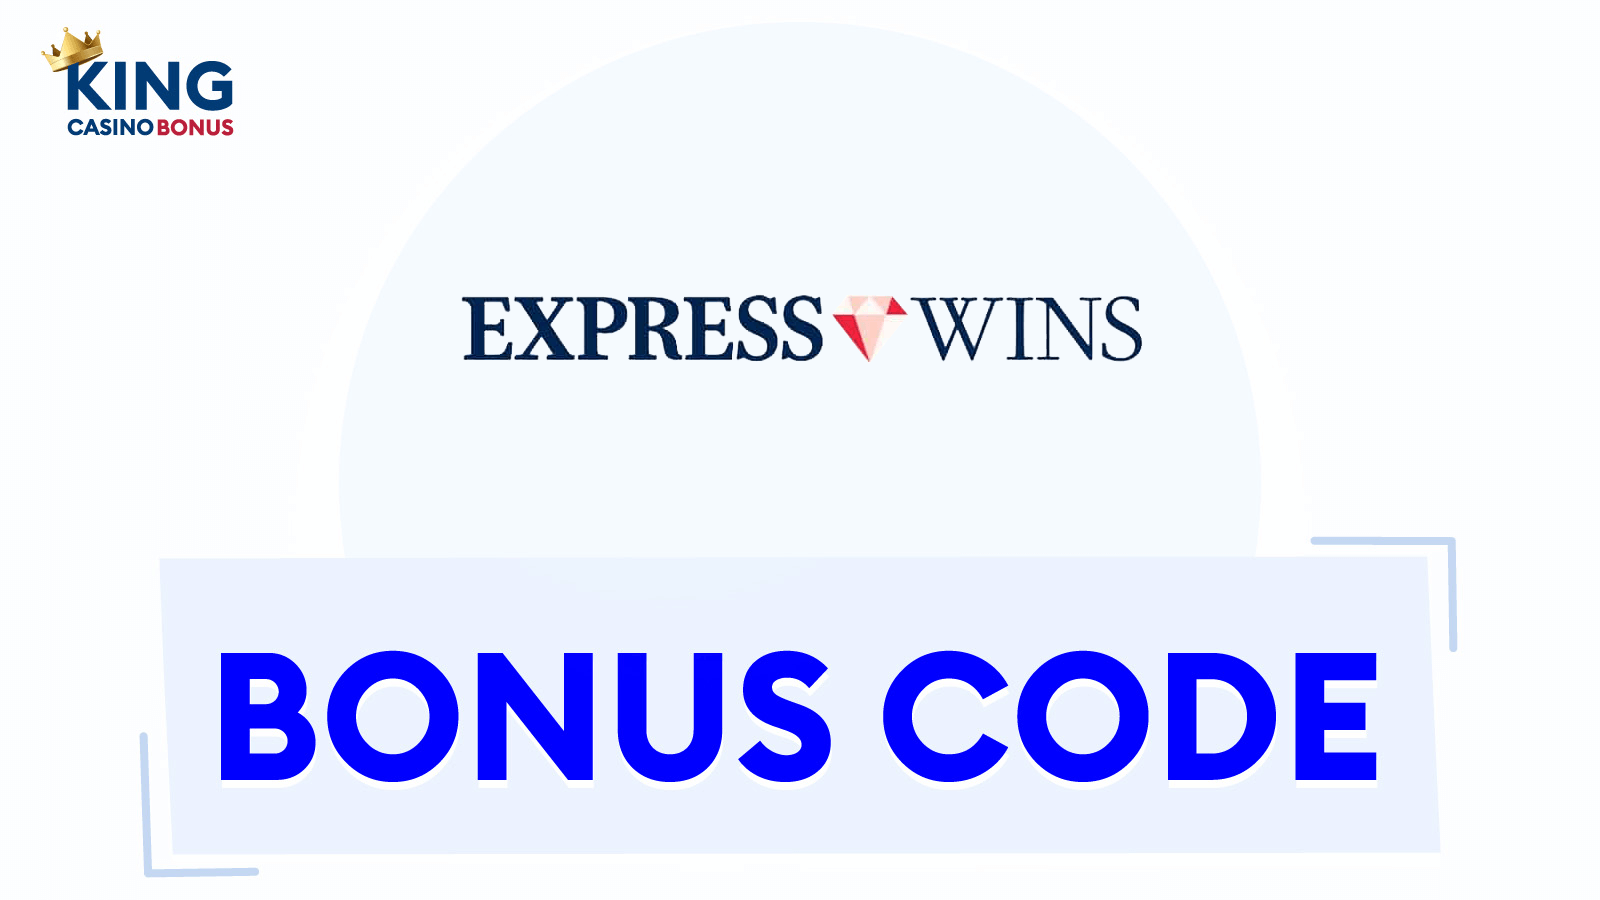 Express Wins Casino Bonus Codes